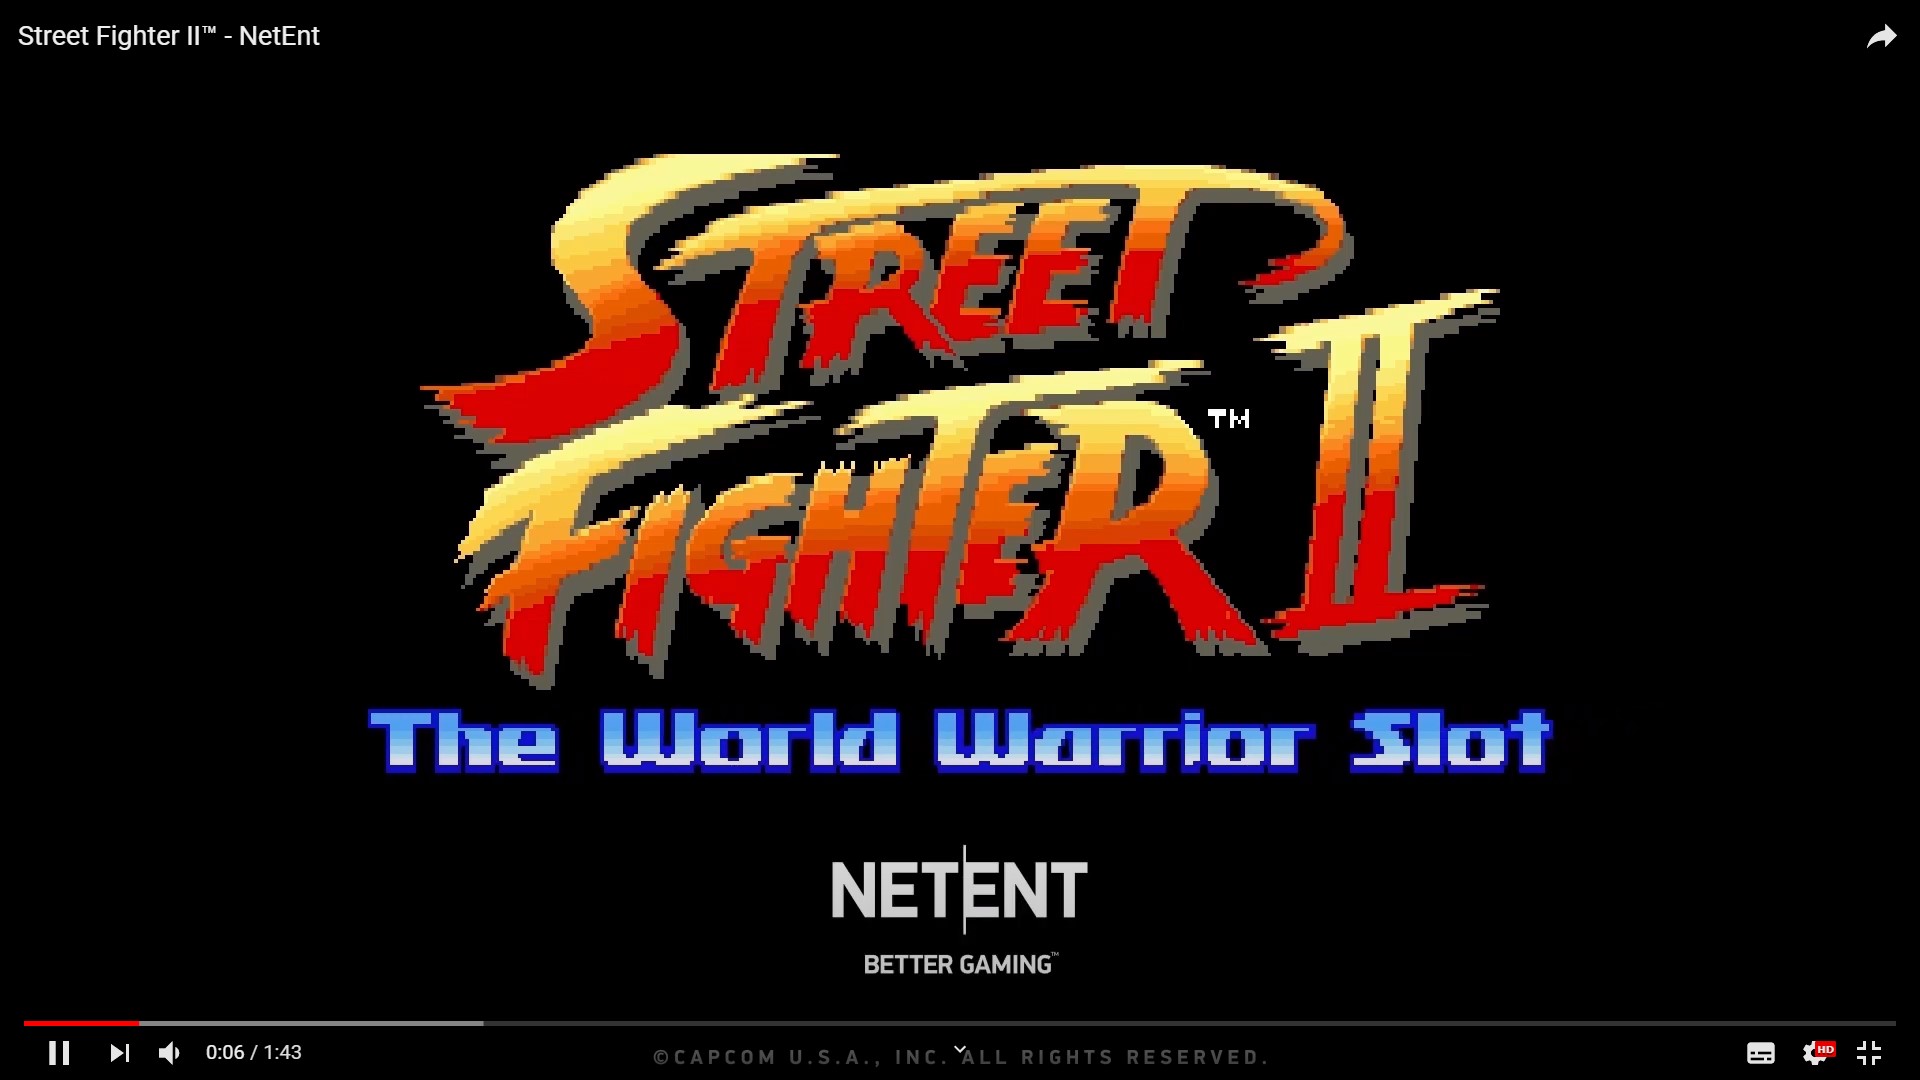 Street Fighter II NetEnt